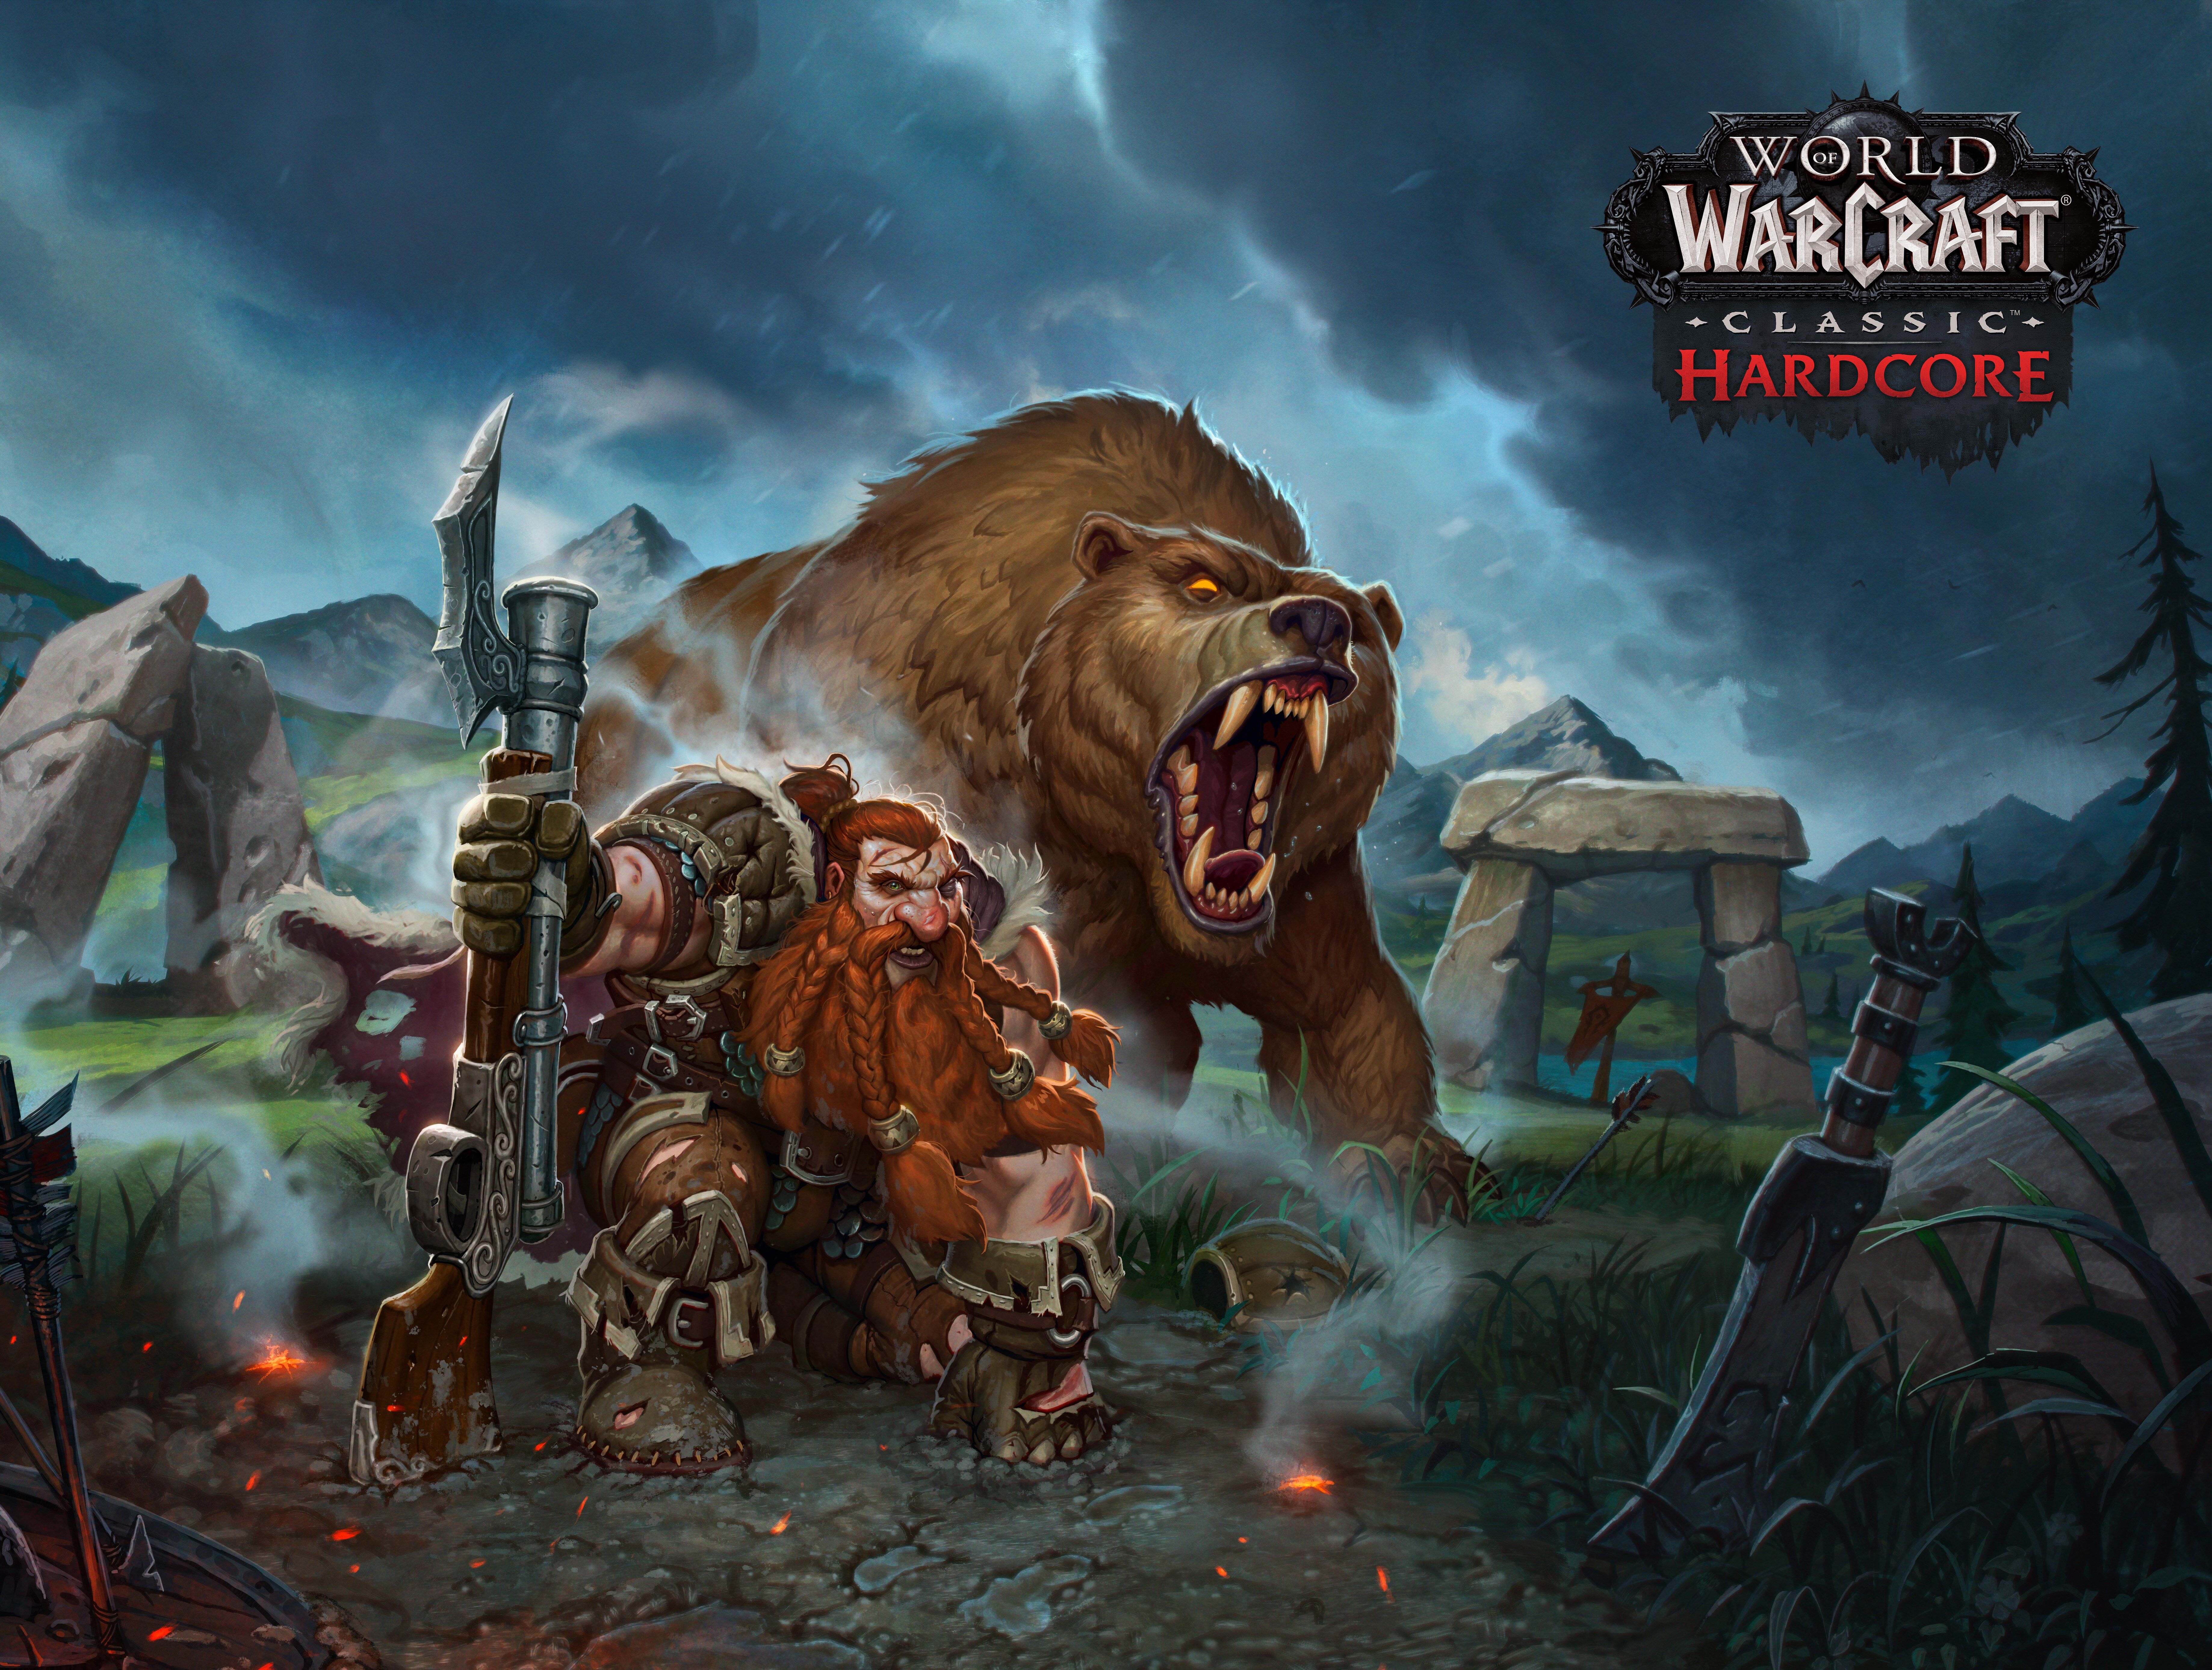 World of Warcraft: Classic Hardcore - Wowpedia - Your wiki guide